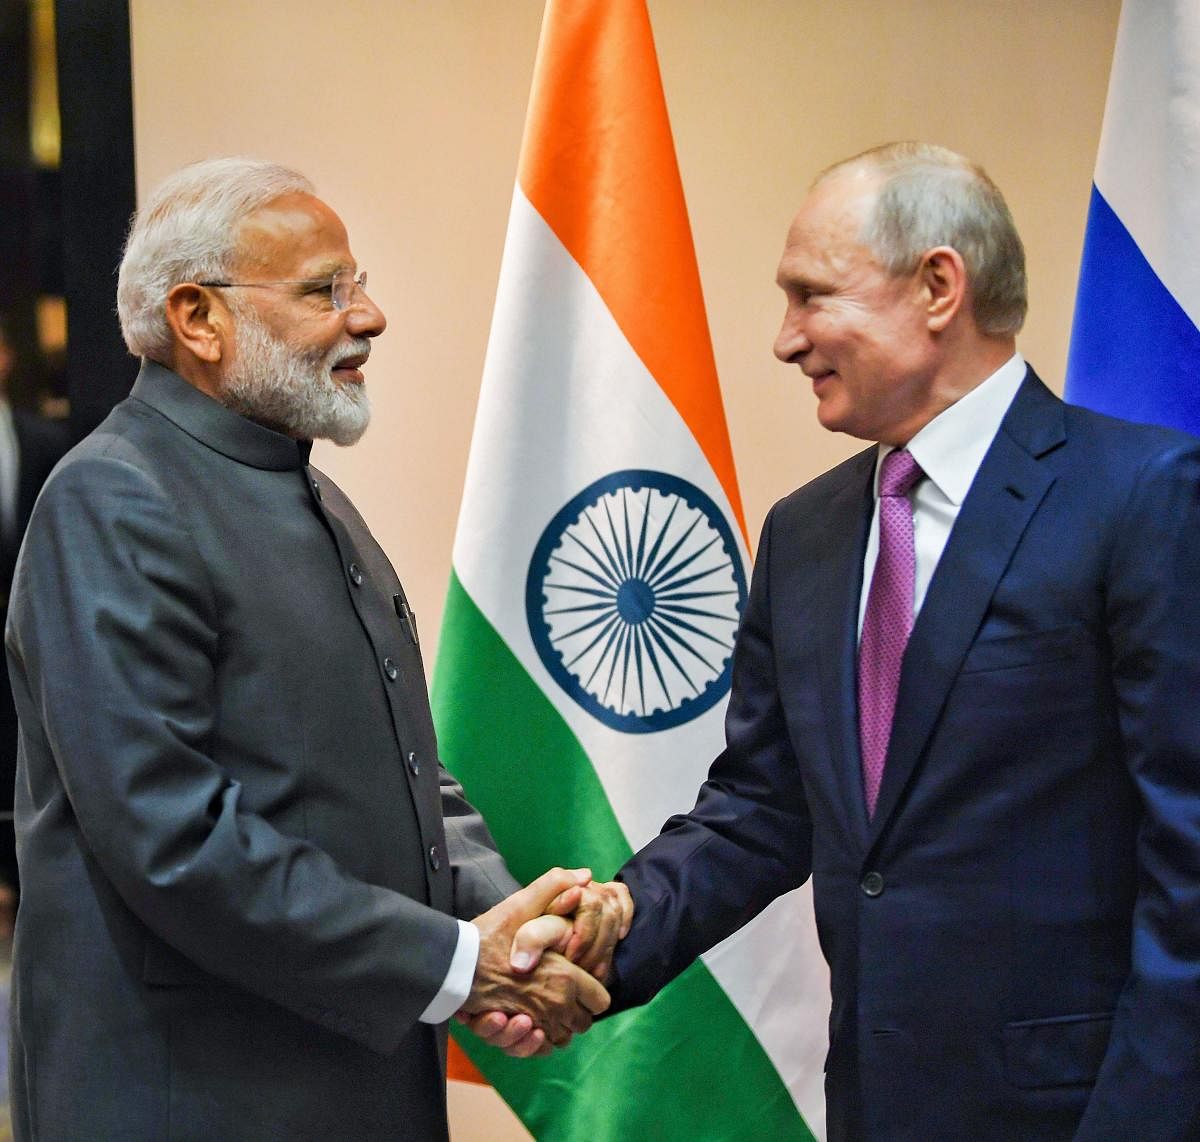 Prime Minister Narendra Modi shakes hands with Russian President Vladimir Putin. (File Photo)